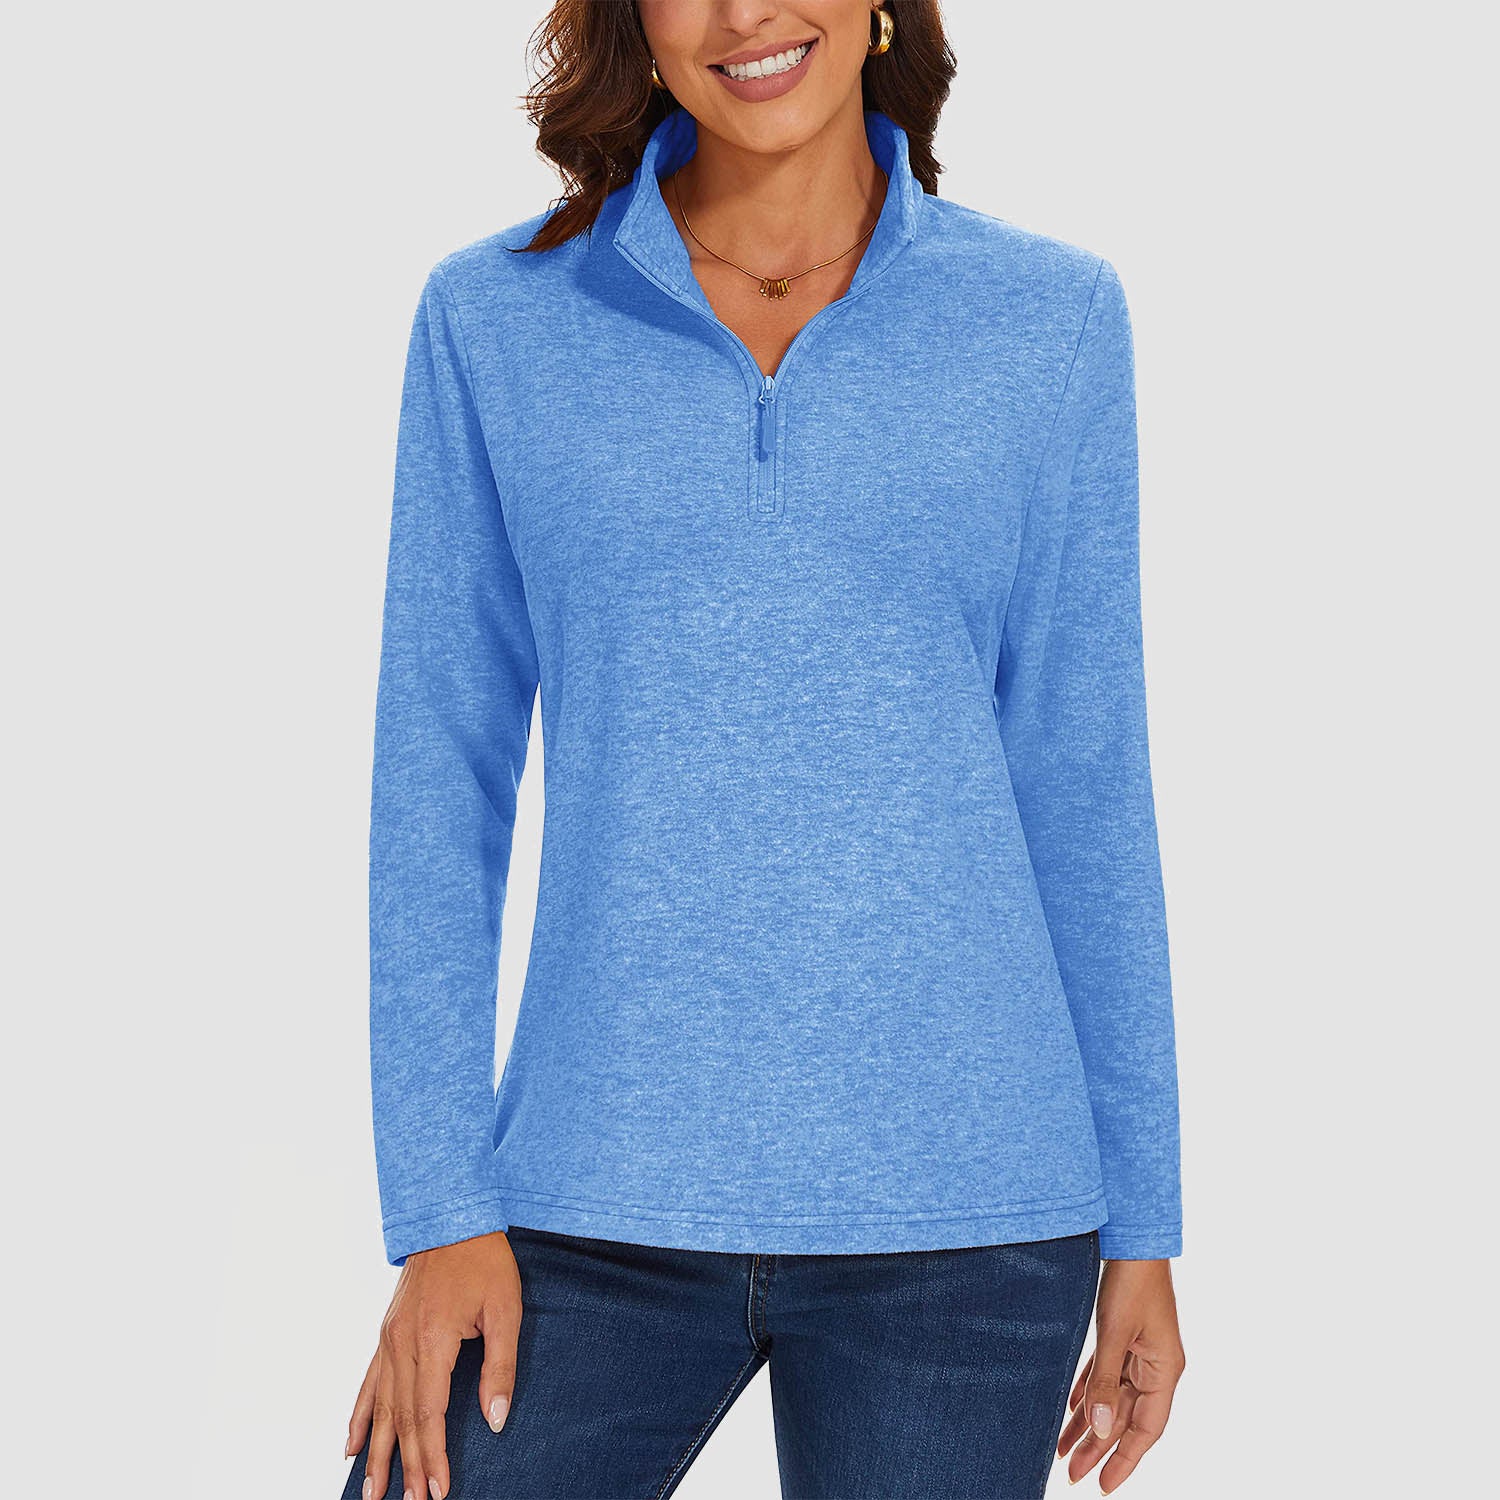 Womens Quarter Zip Pullover Long Sleeve Fleece Shirts Sweatshirt Athletic Top